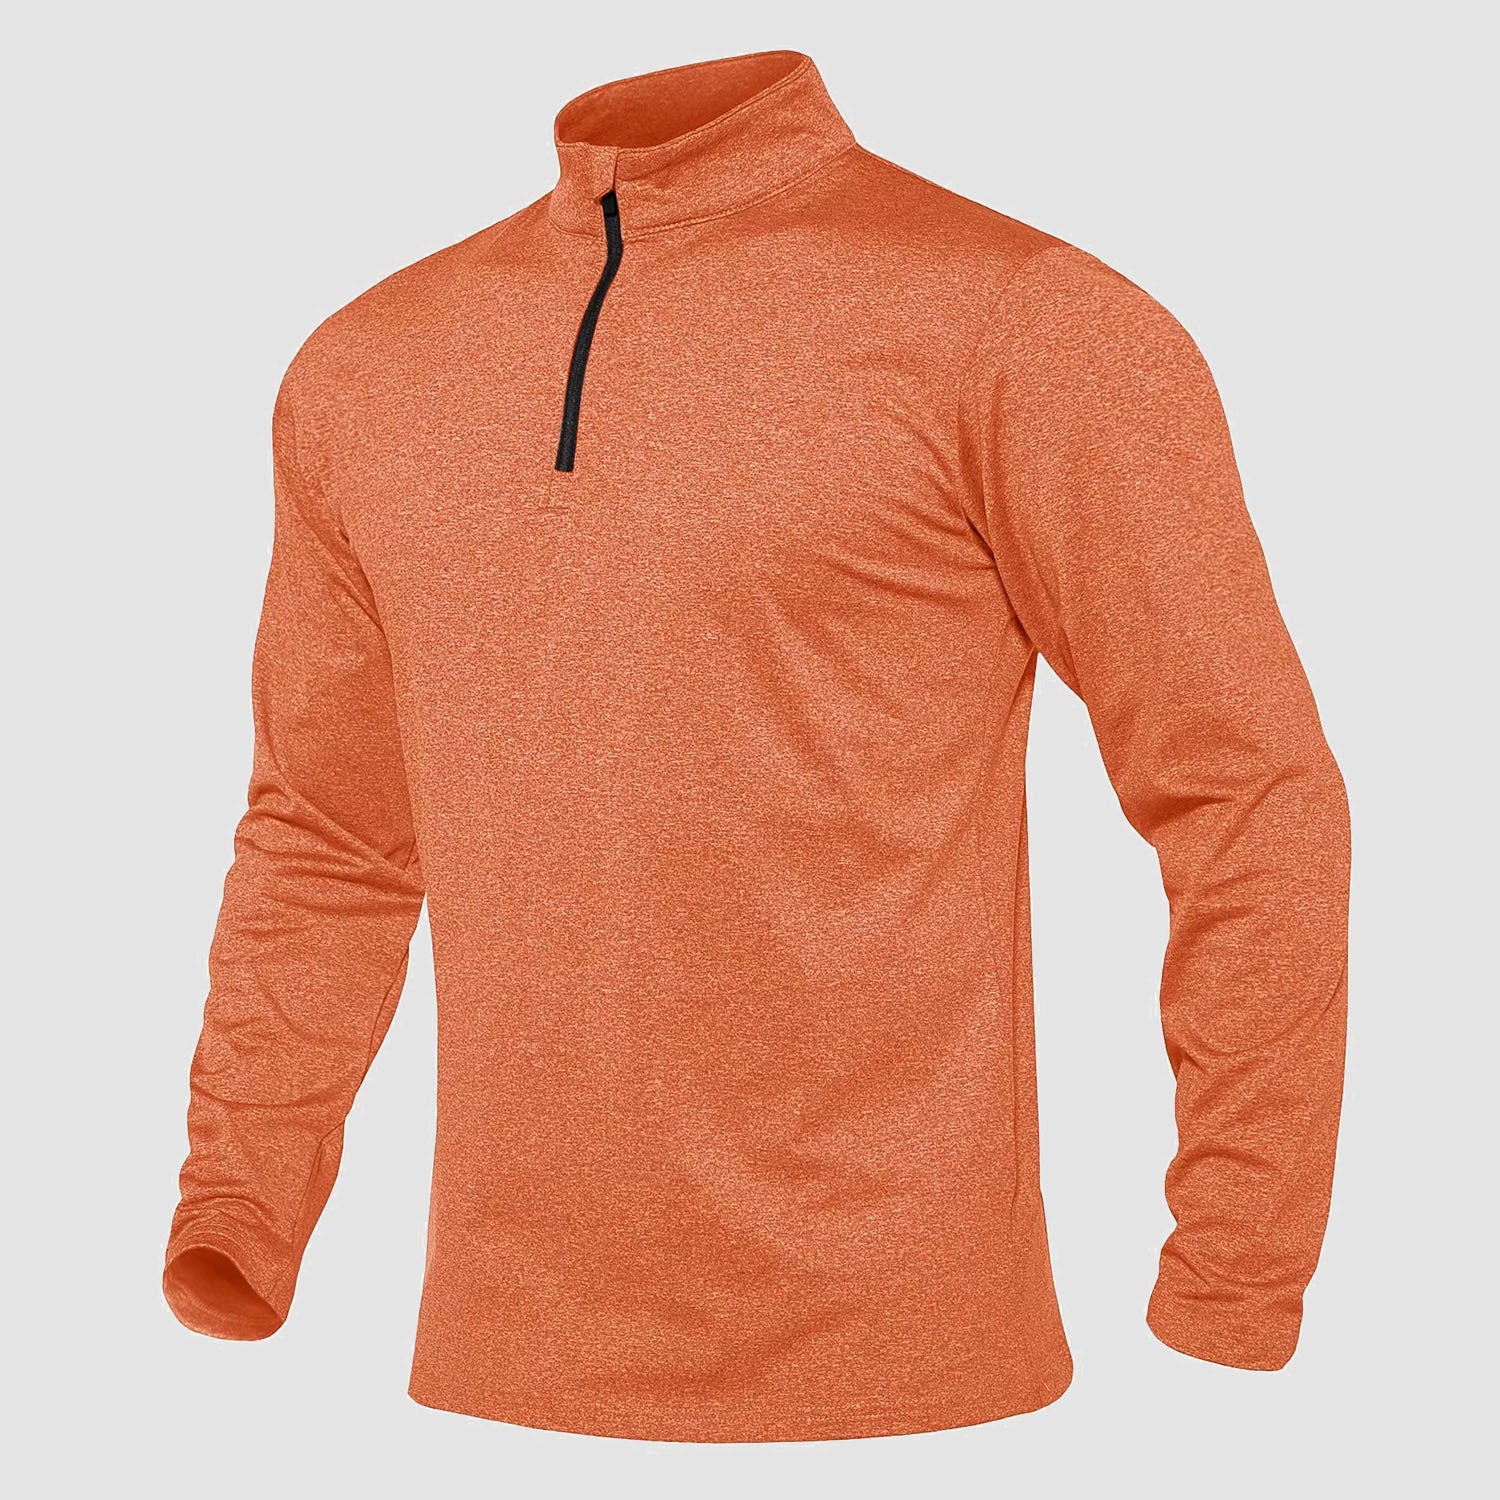 Men's Athletic Shirts 1/4 Zip Fleece Pullover Long Sleeve Sweatshirts